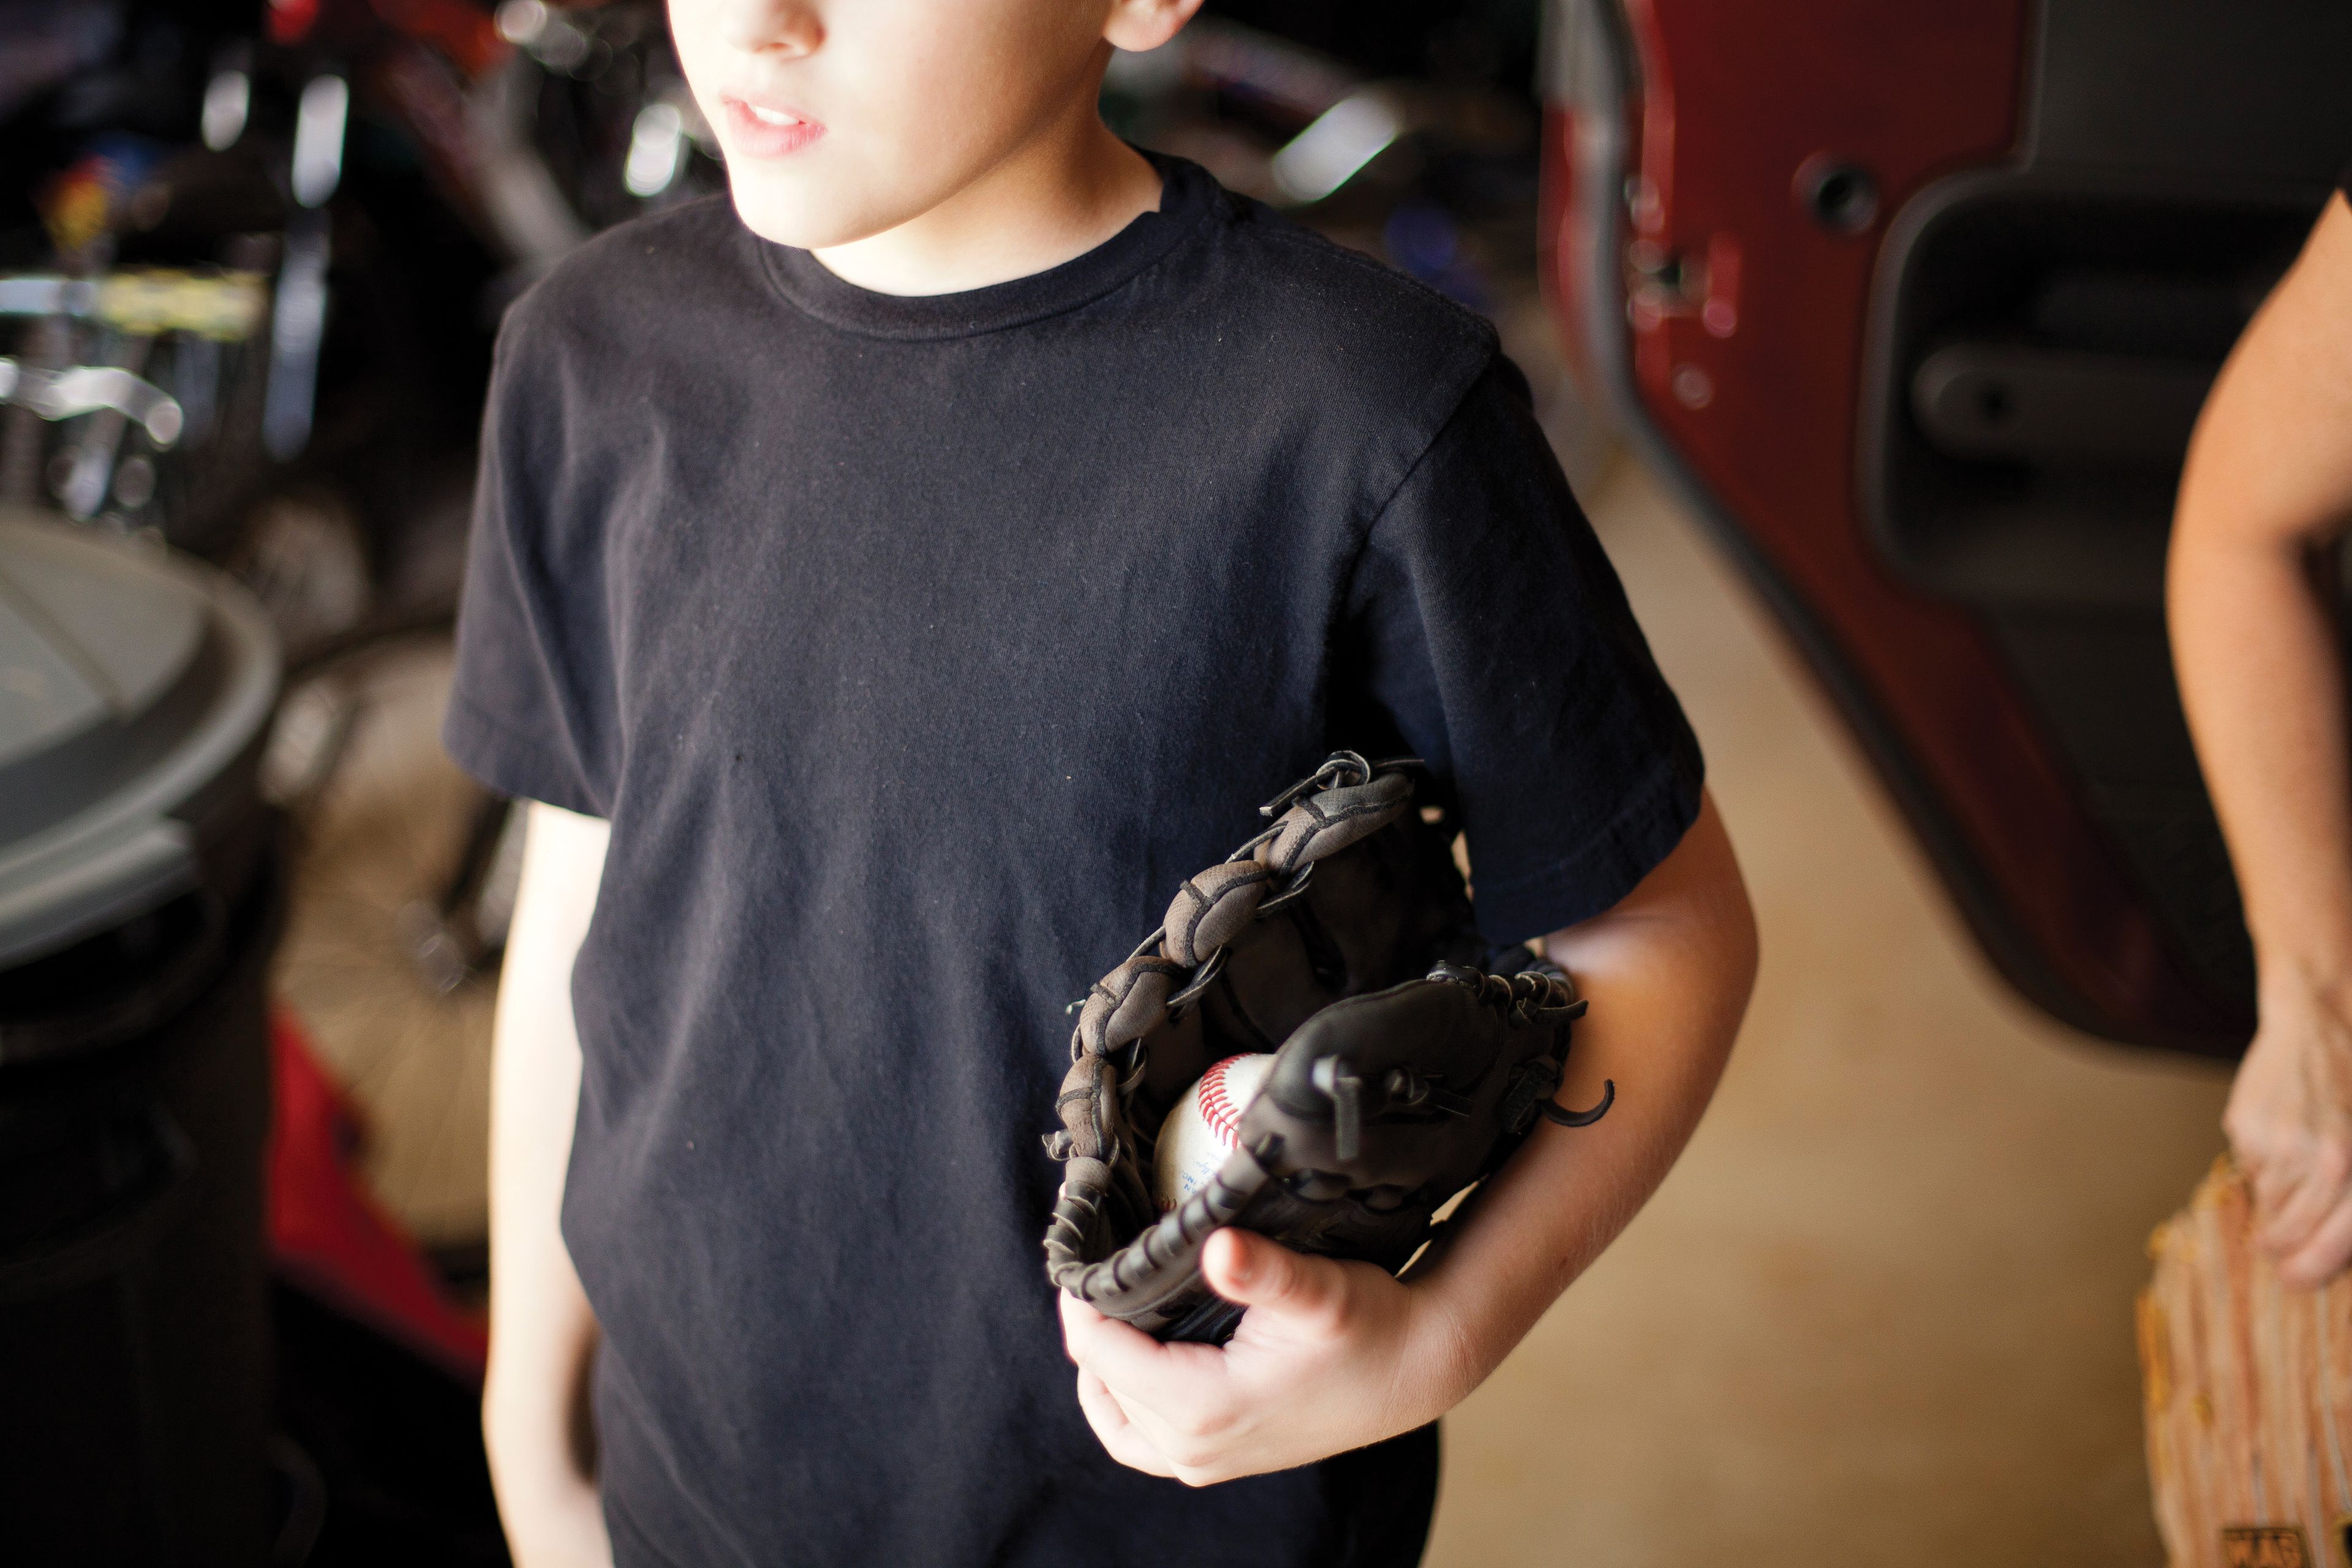 A young boy holding a mitt and baseball.